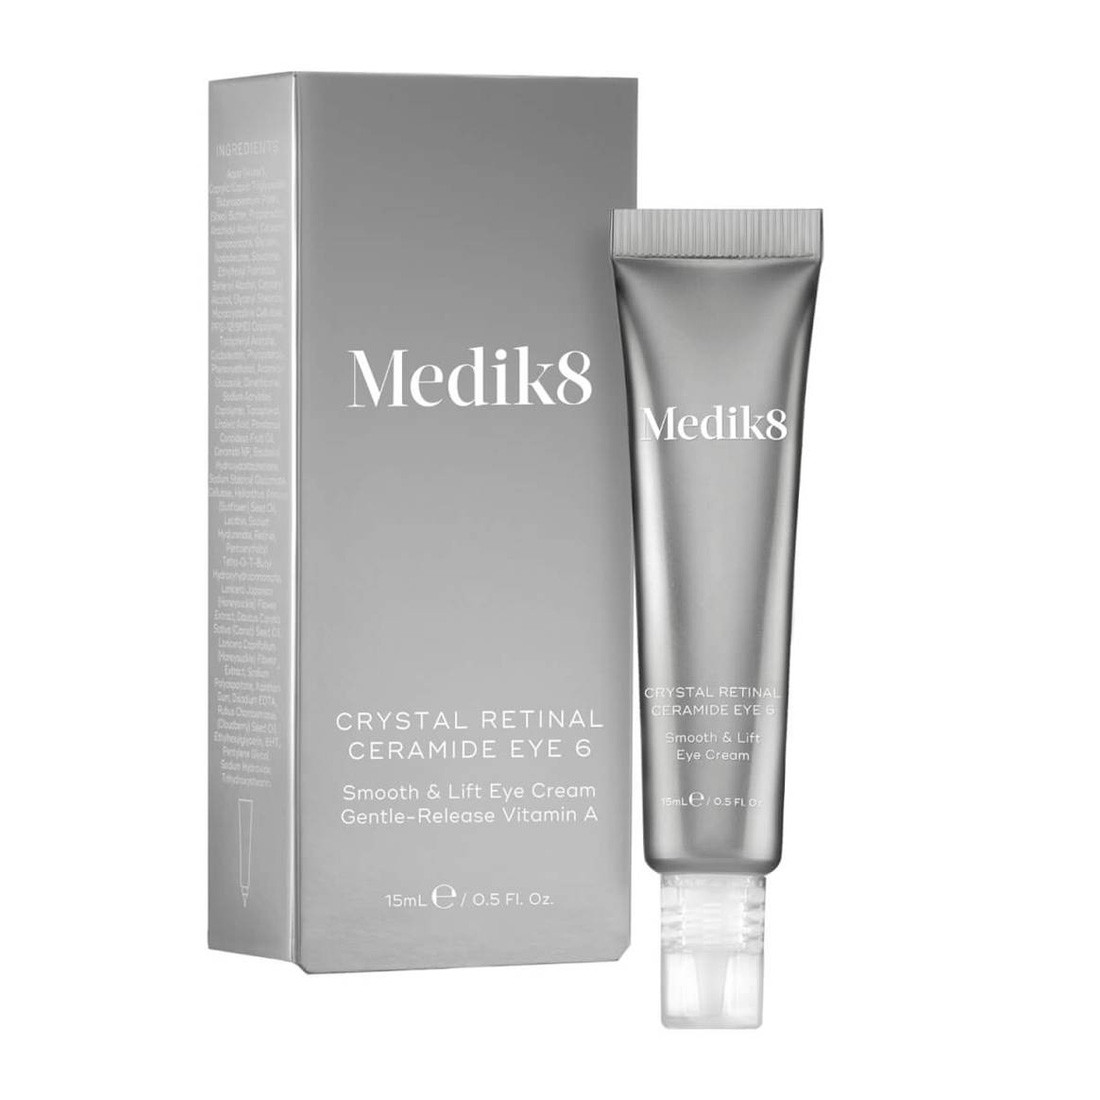 Medik8 NEW! Crystal Retinal Ceramide Eye 6 - Крем для кожи вокруг глаз